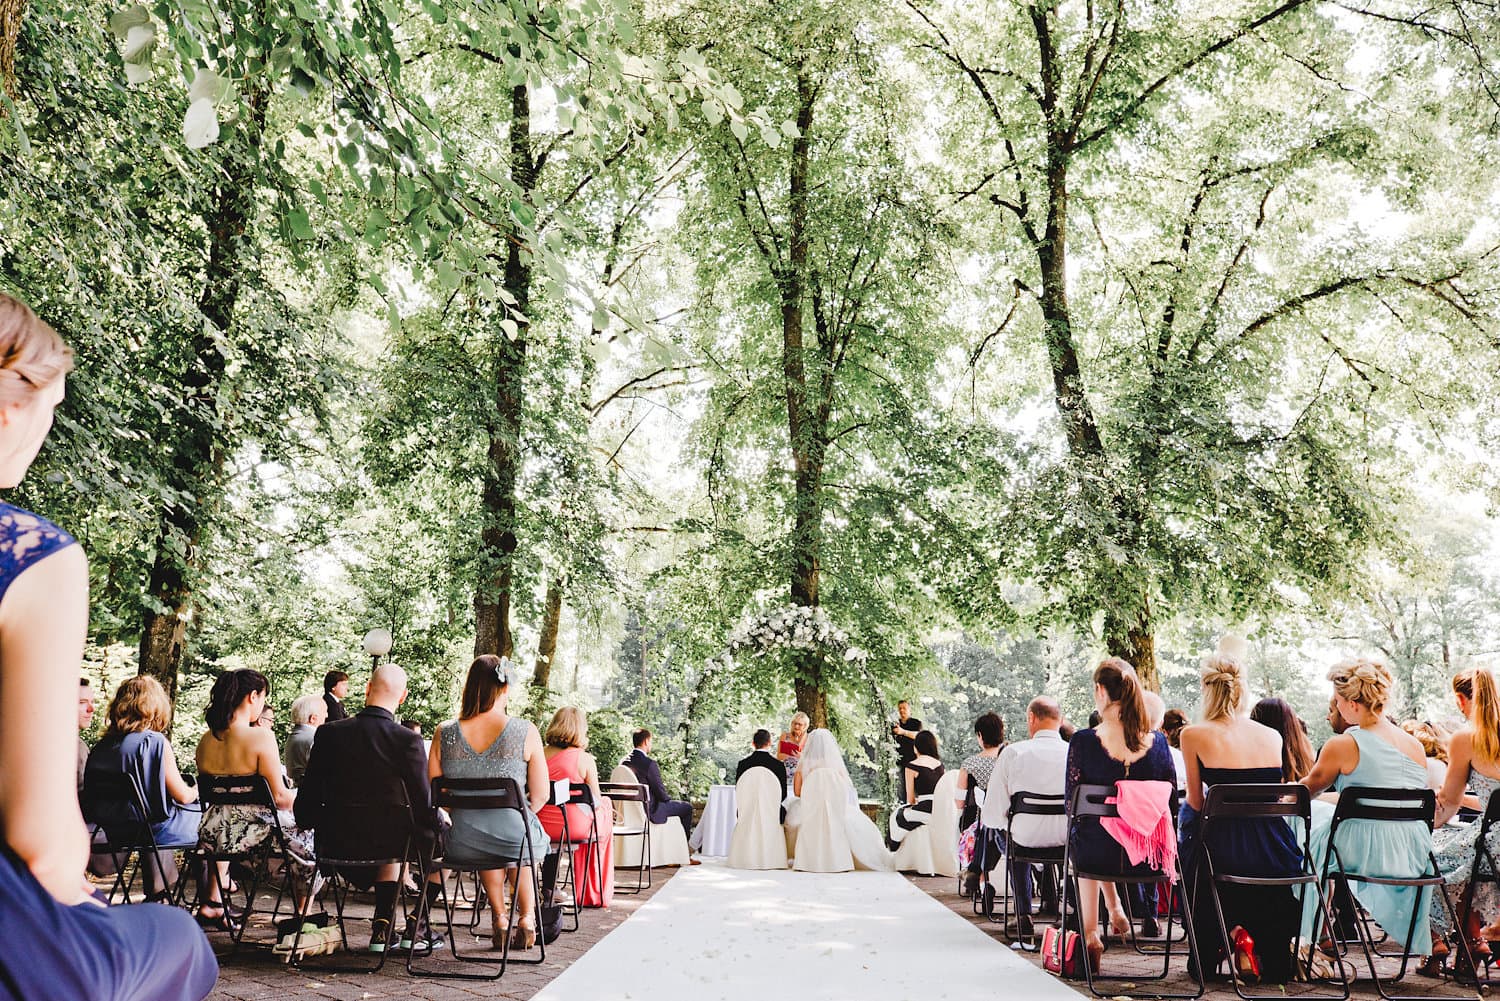 Beautiful outdoor wedding ceremony at Kavalierhaus